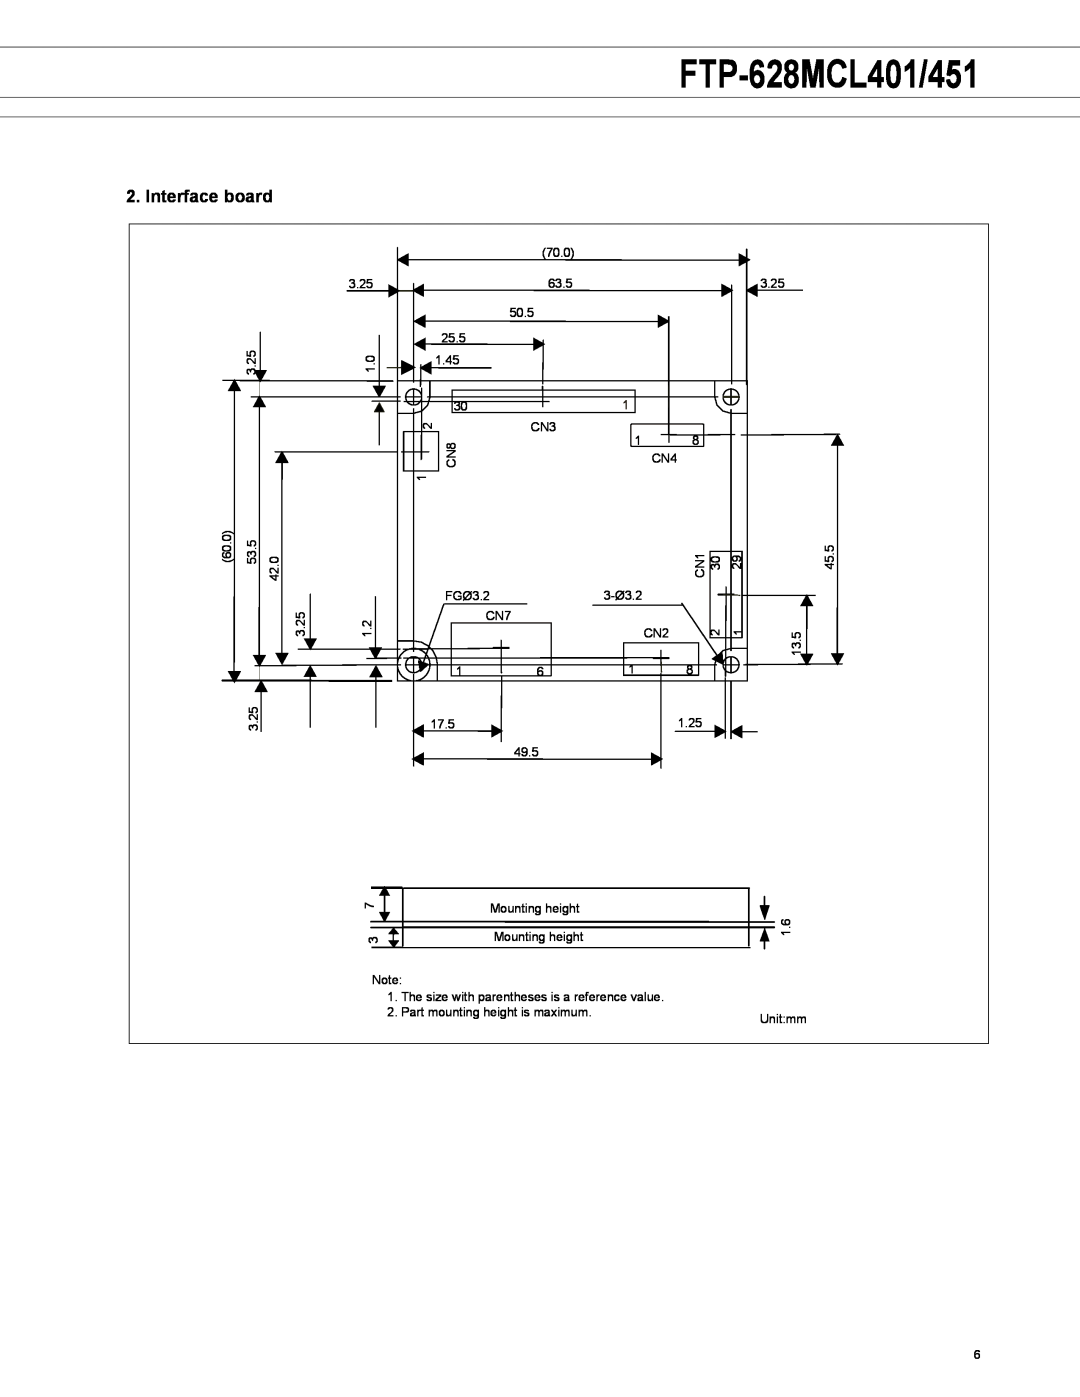 Fujitsu FTP-628MCL451 manual Interface board, FTP-628MCL401/451 